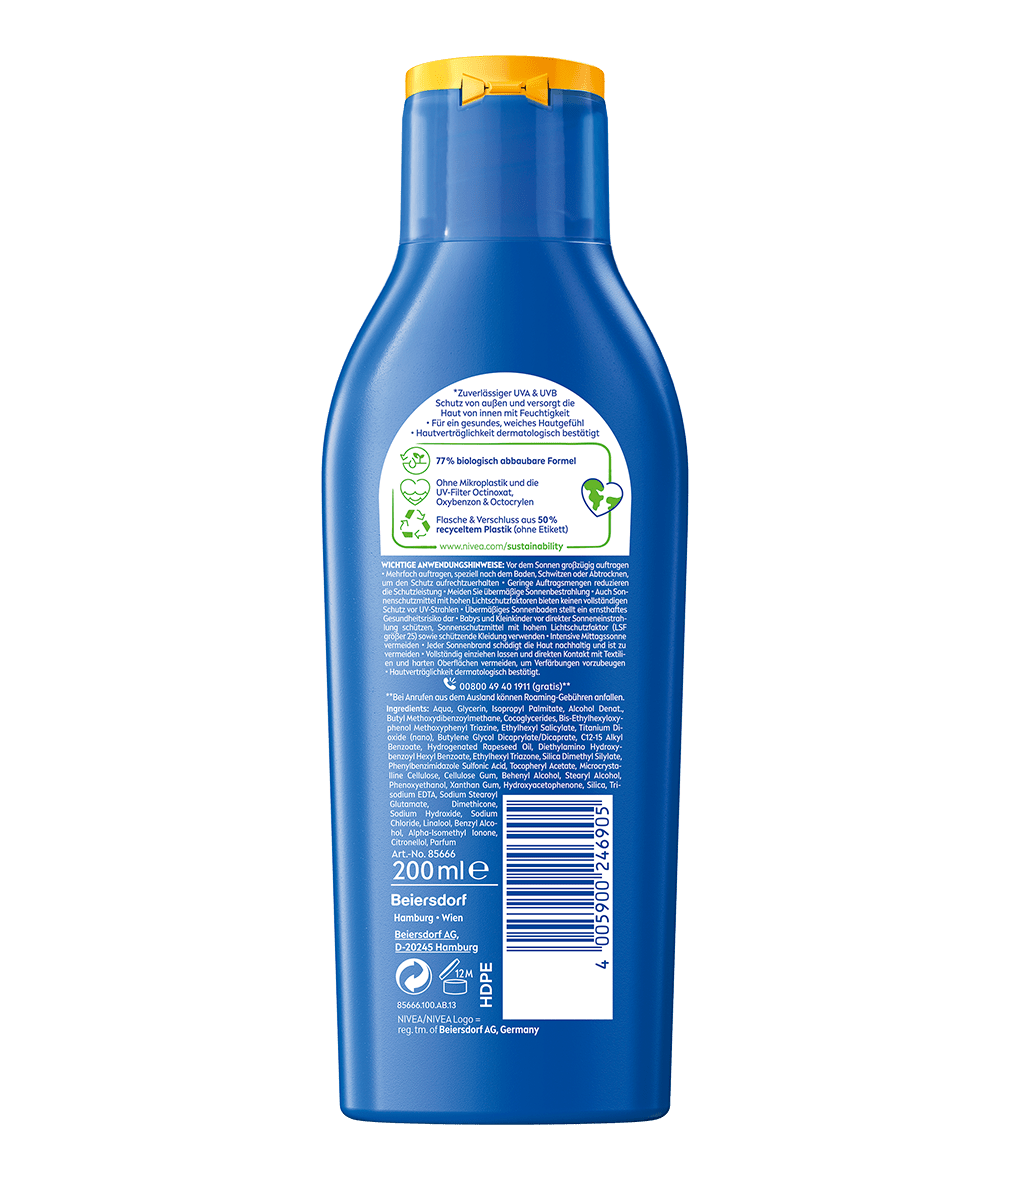 NIVEA SUN Schutz & Pflege Lotion LSF 50+ 200 ml